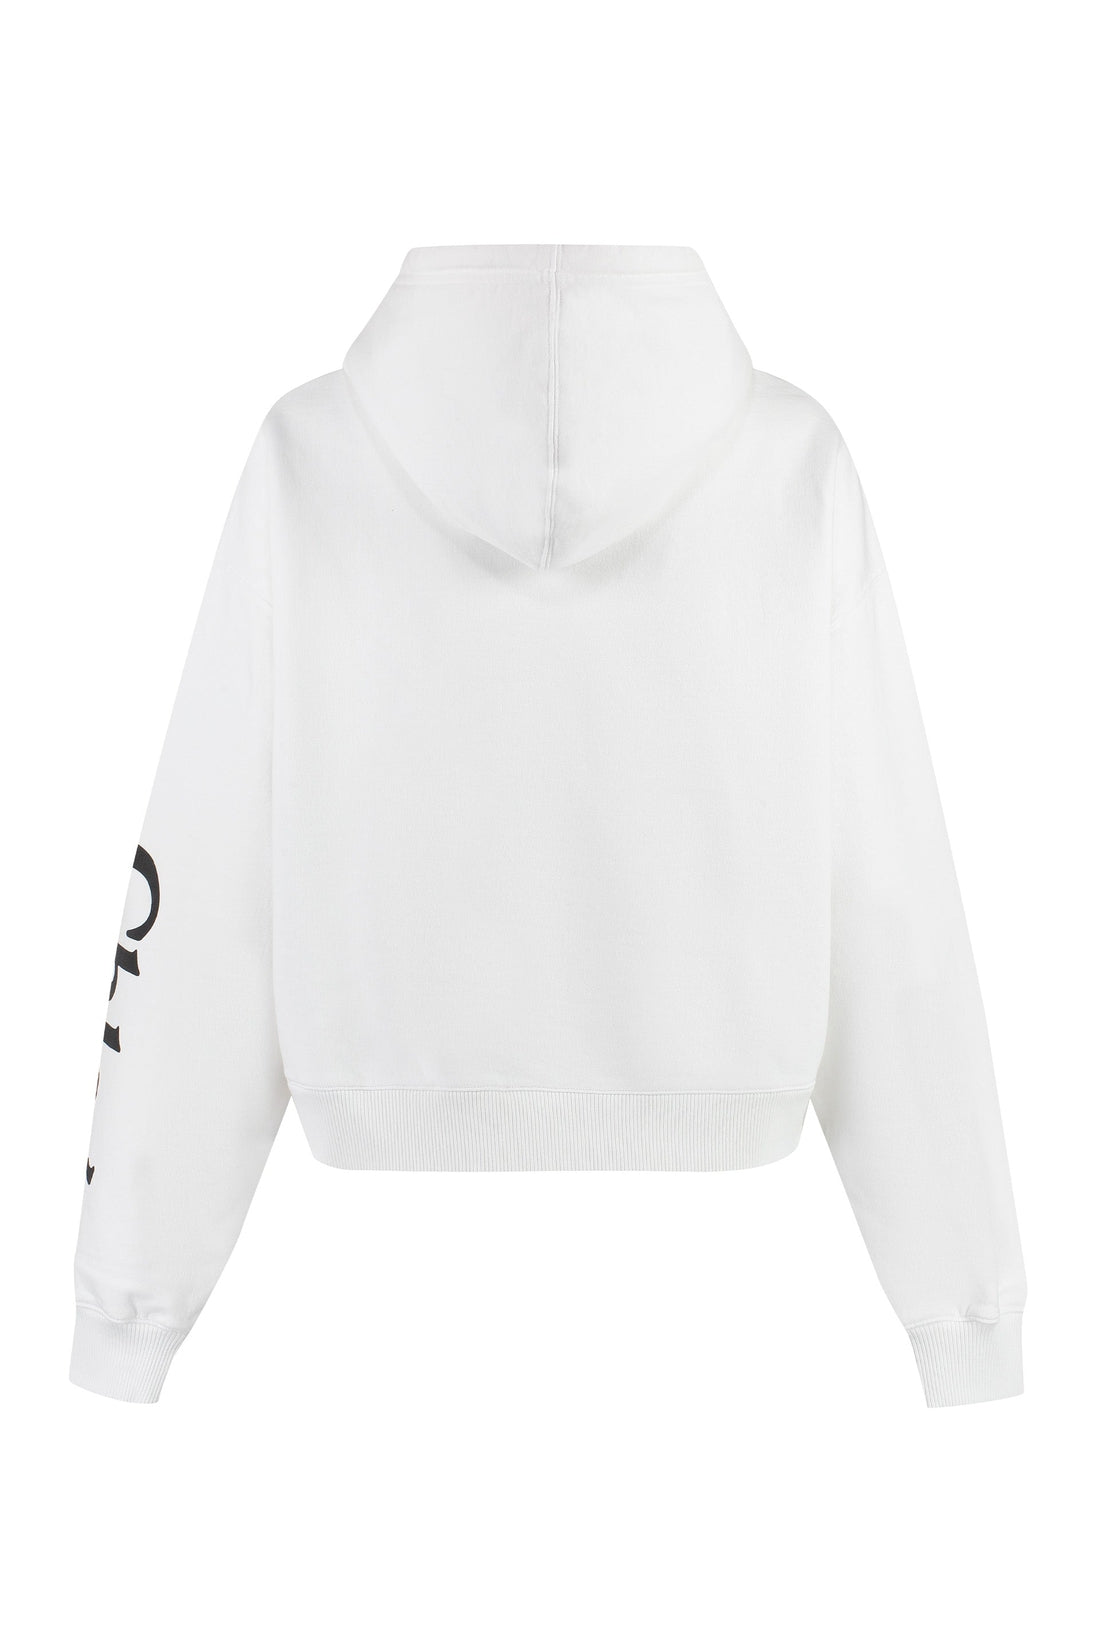 Chloé-OUTLET-SALE-Printed hoodie-ARCHIVIST